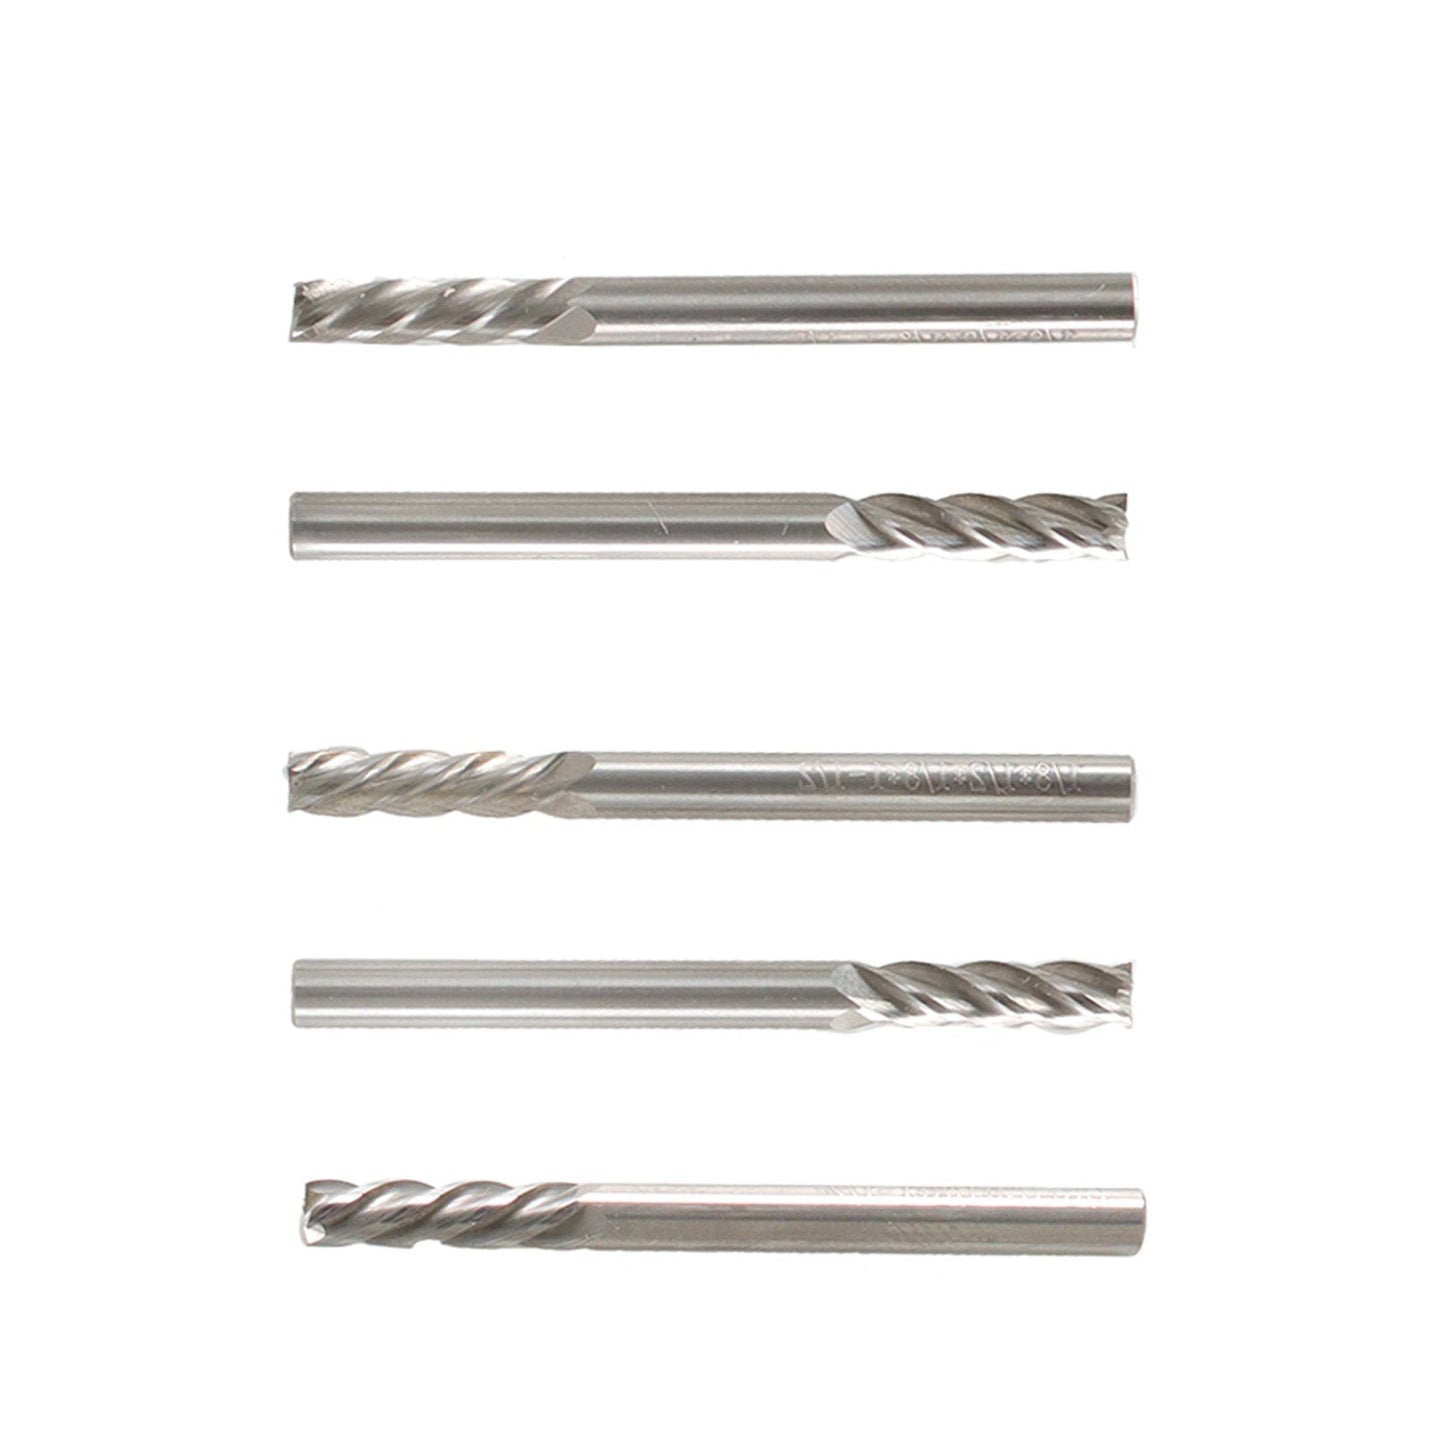 findmall  10Pcs 1/8 Inch Helix Carbide End Mill 4 Flute 1/2 Inch Length of Cut Fit for Aluminum Cut Non-Ferrous Metal Upcut CNC Spiral Router Bit FINDMALLPARTS